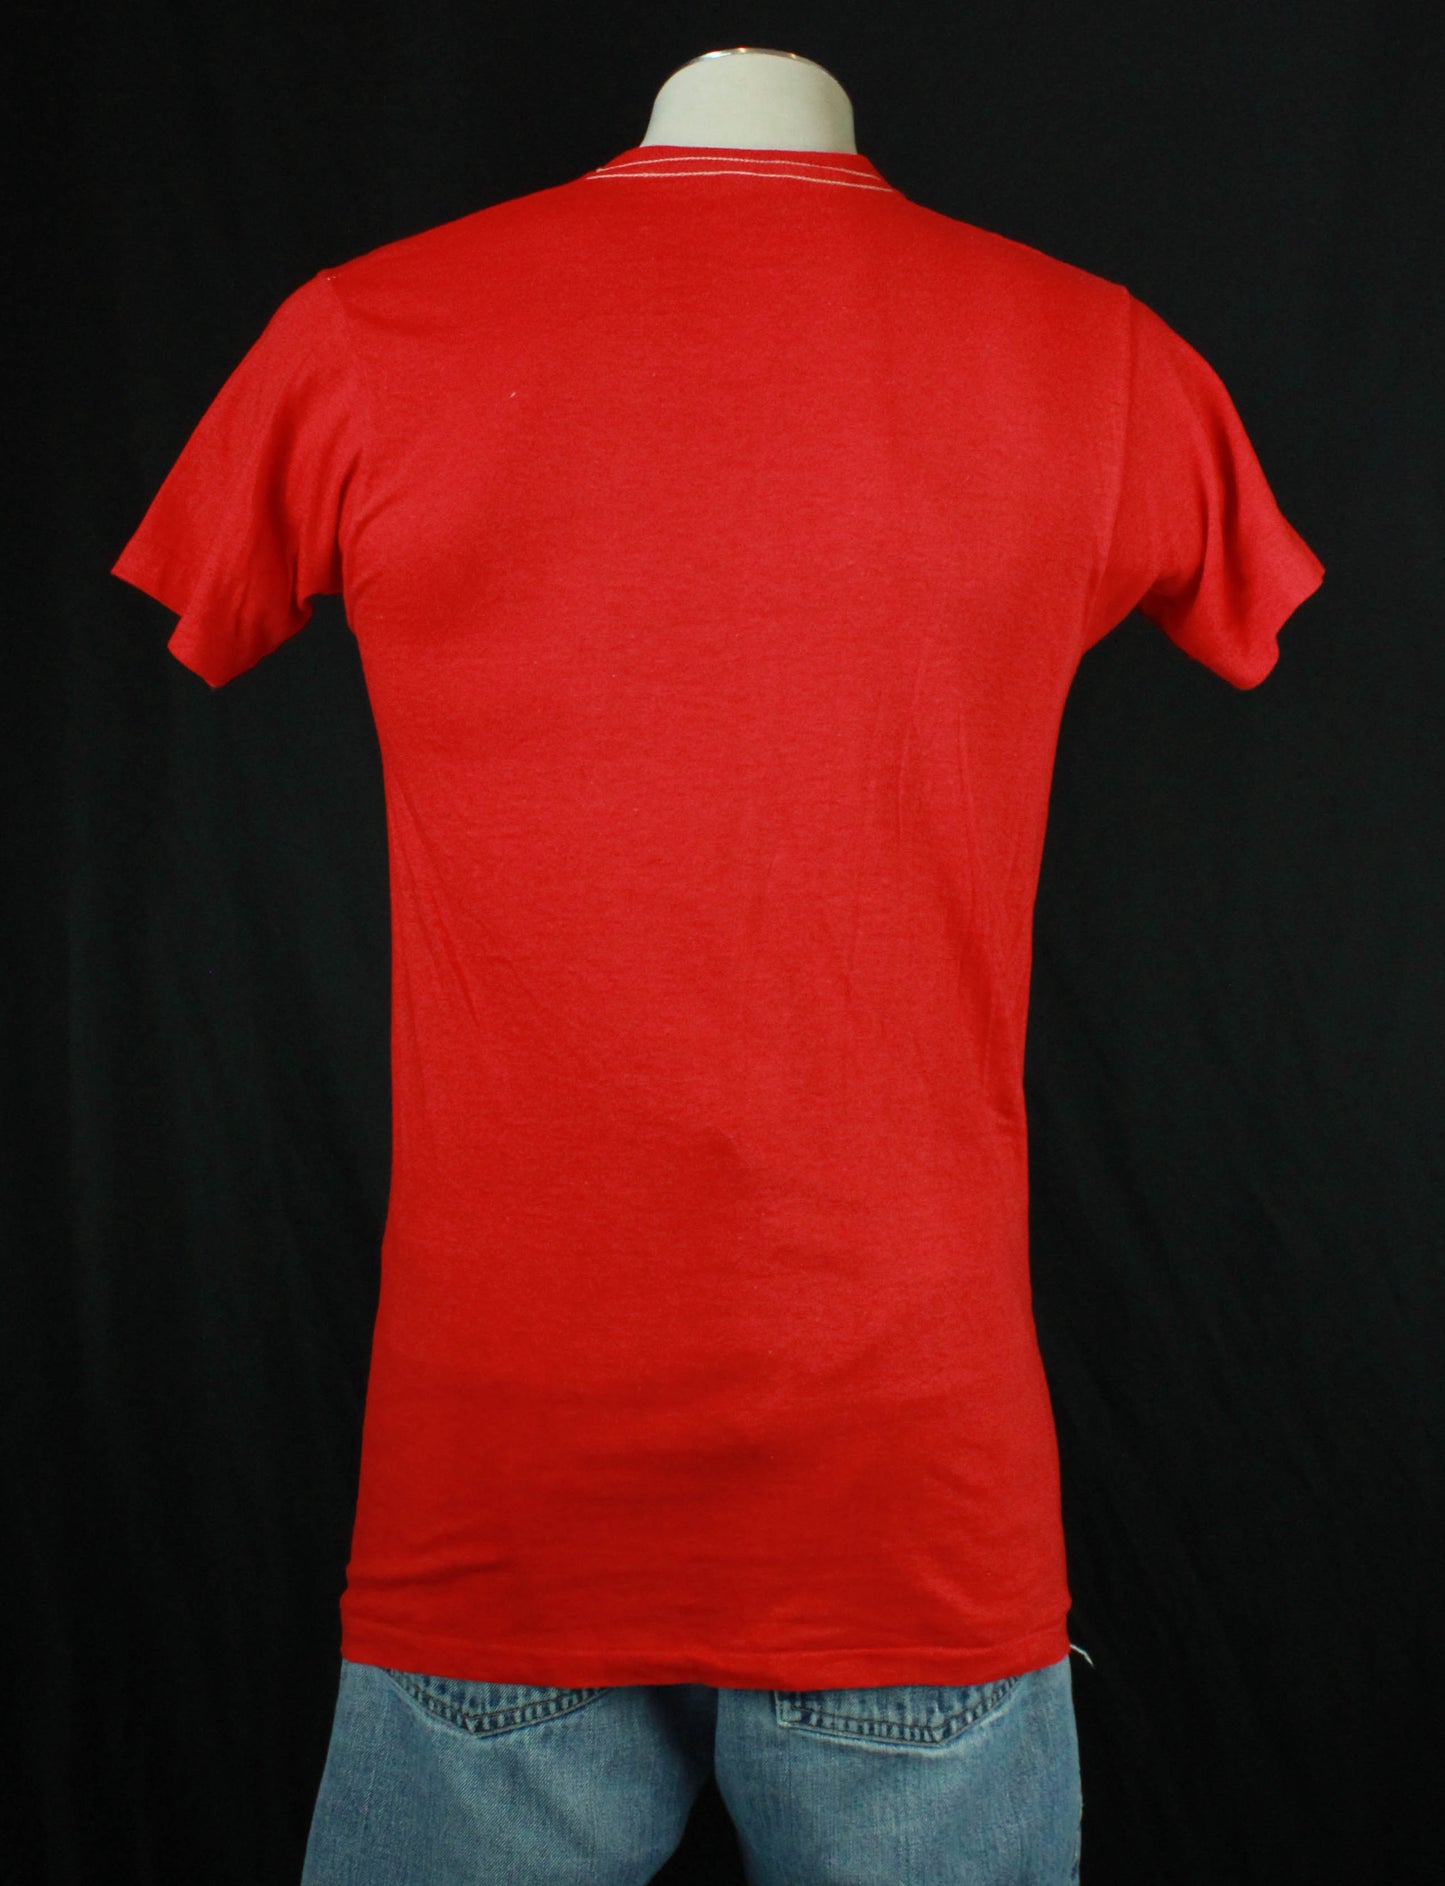 Vintage 80's 42nd Street Red Graphic T Shirt - Medium